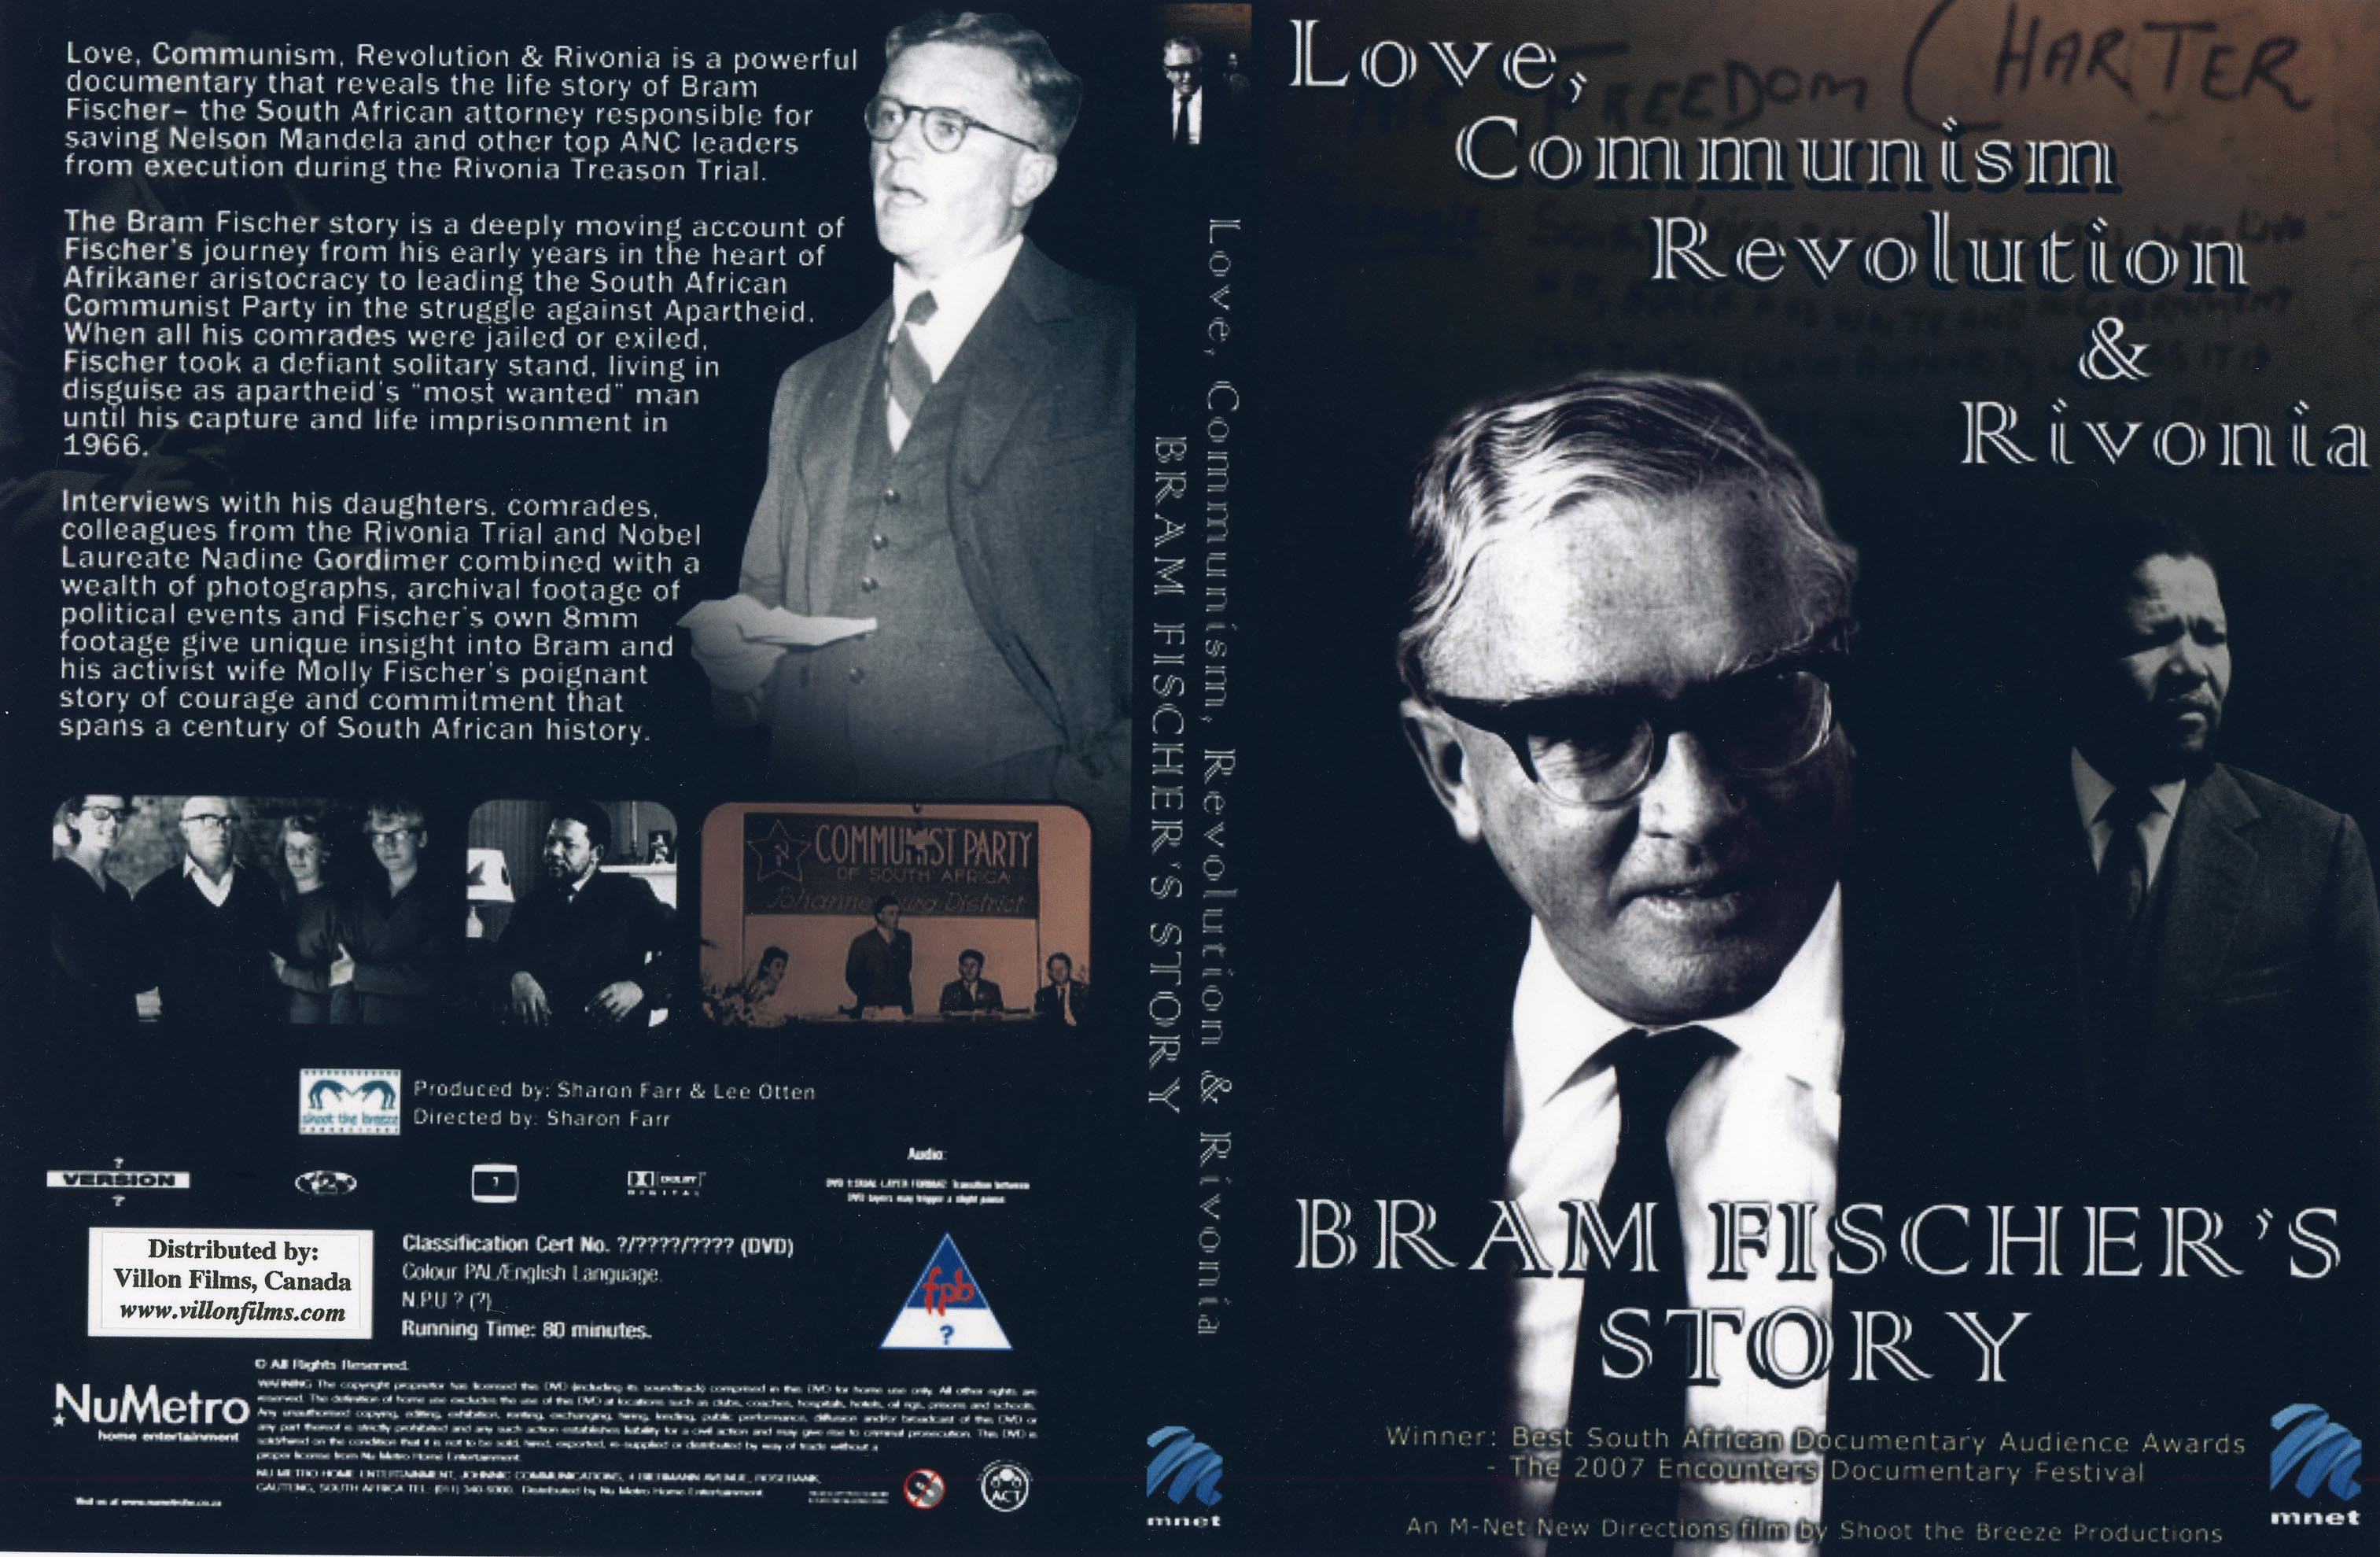 Bram Fischer’s Story - DVD Sleeve.